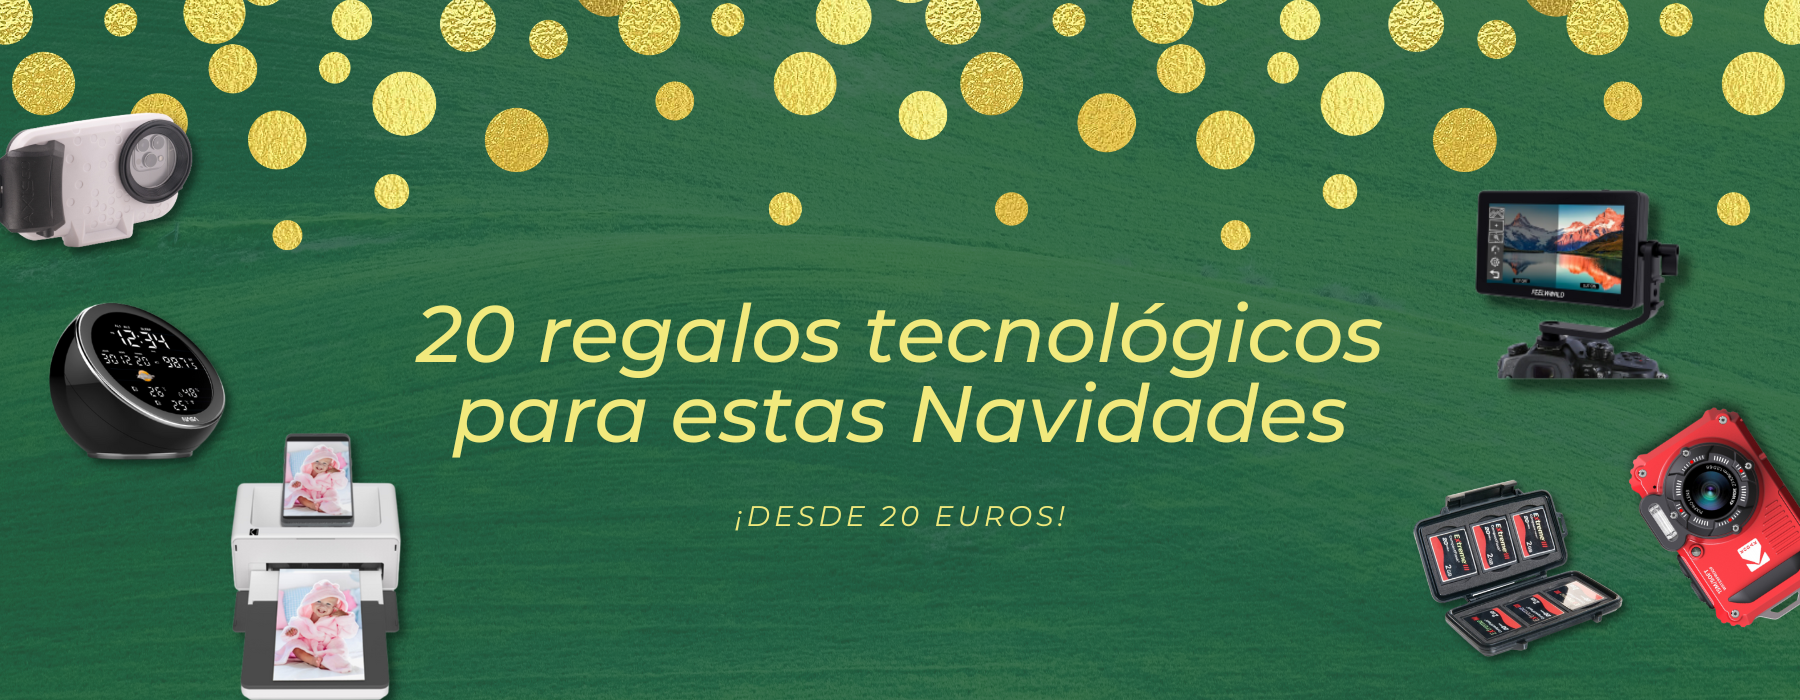 20 regalos tecnológicos para estas Navidades desde 20 euros - ROBISA